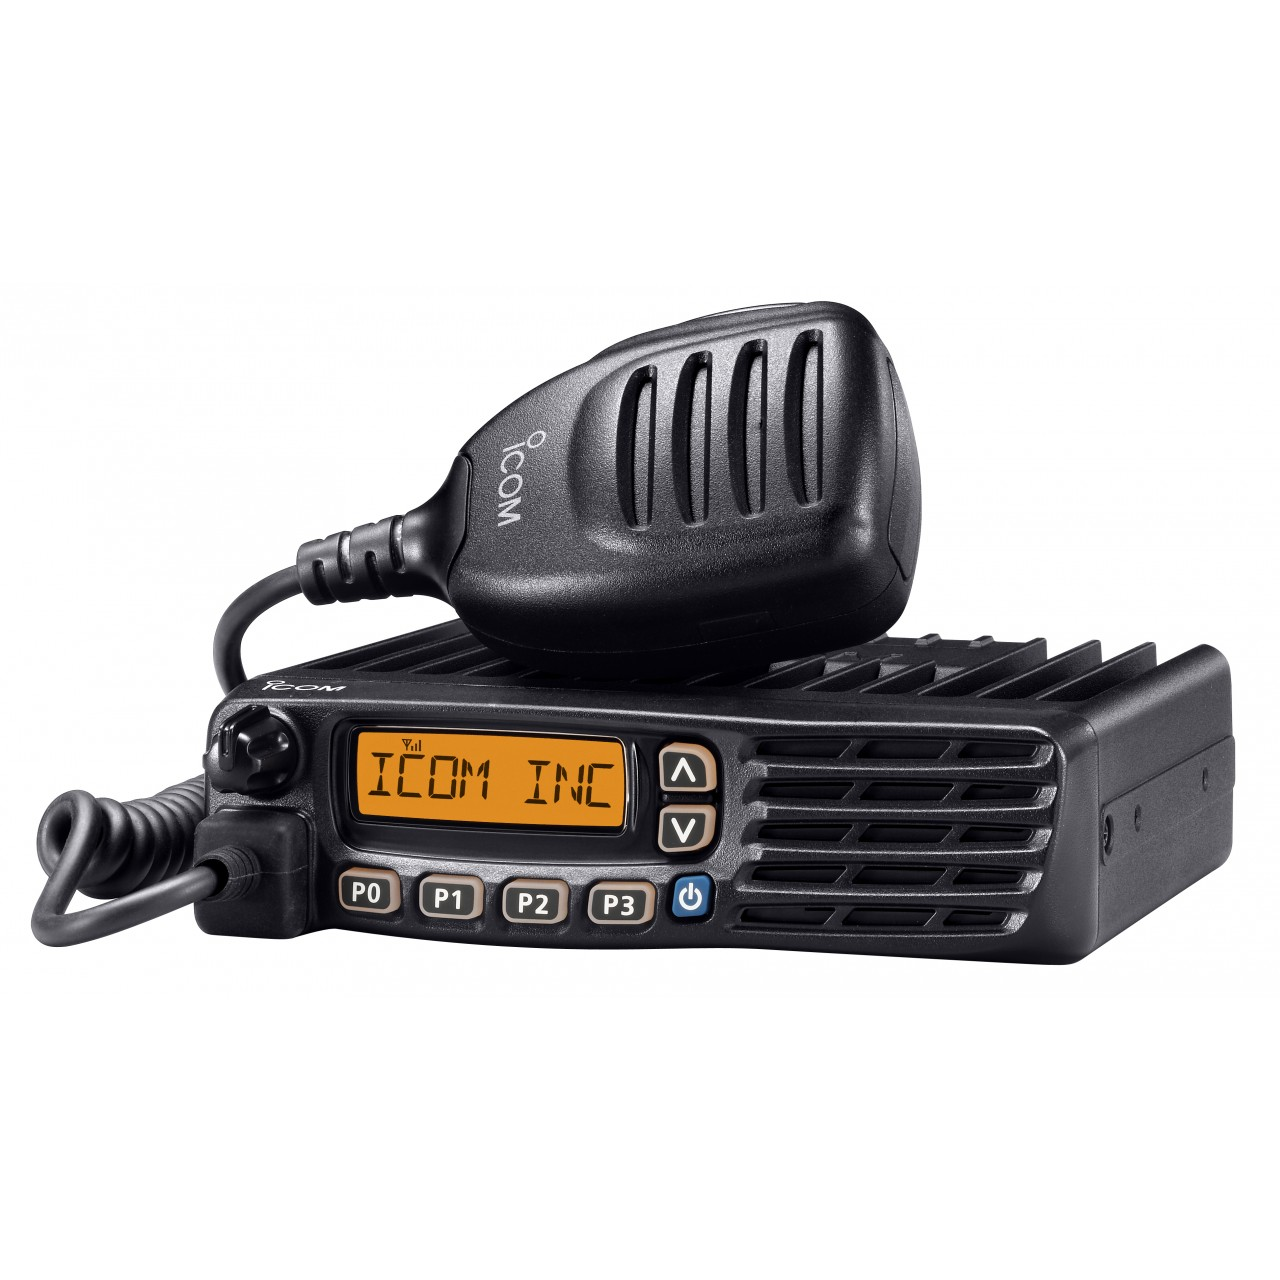 ICOM - VHF / IDAS NUMÉRIQUEIC-F5122D (25 W) MAROC